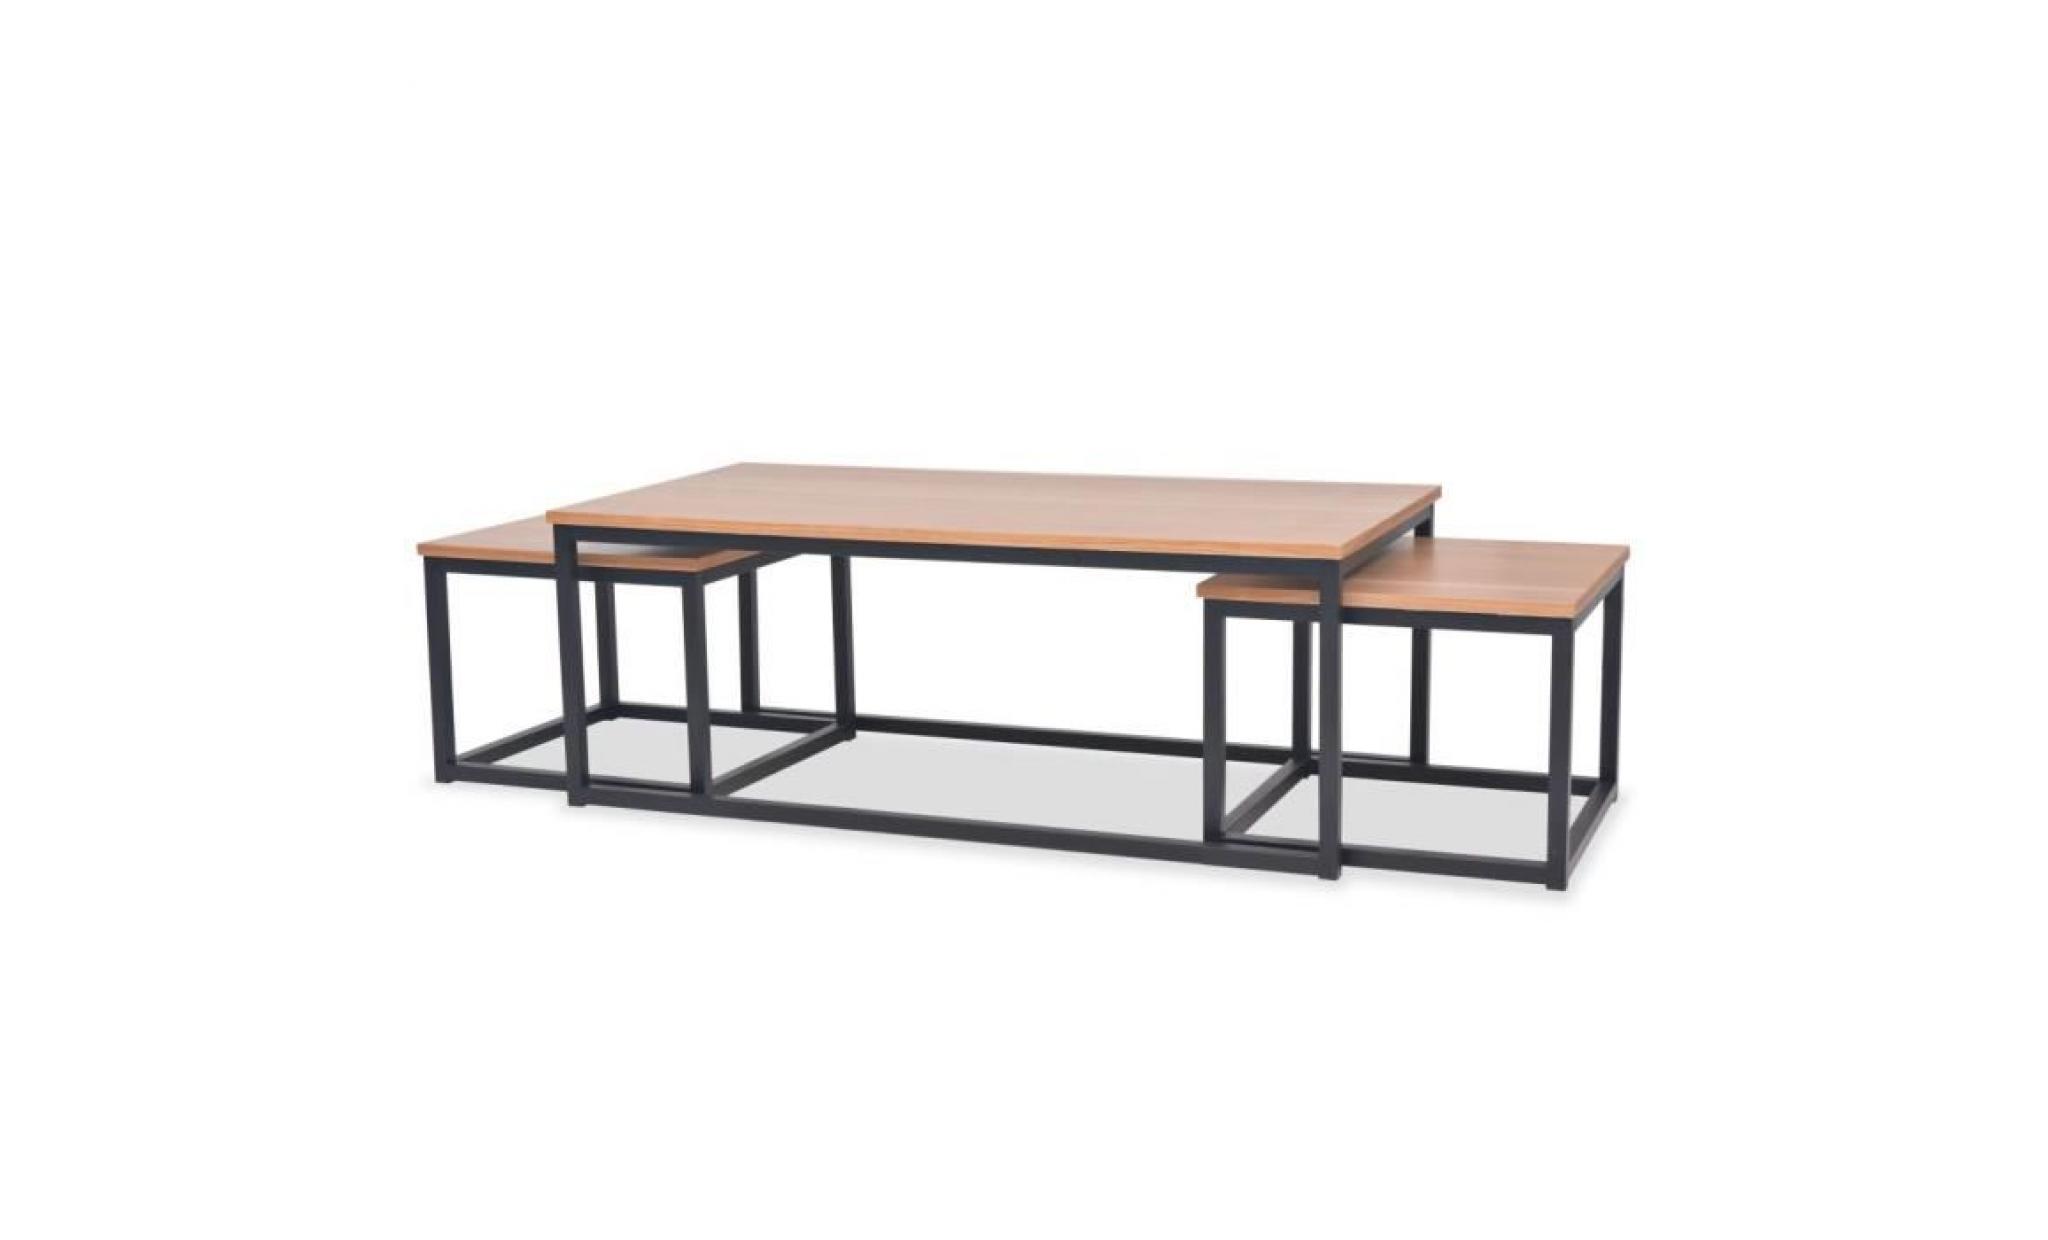 3 pcs table basse gigogne en bois de frêne style industriel pour salon